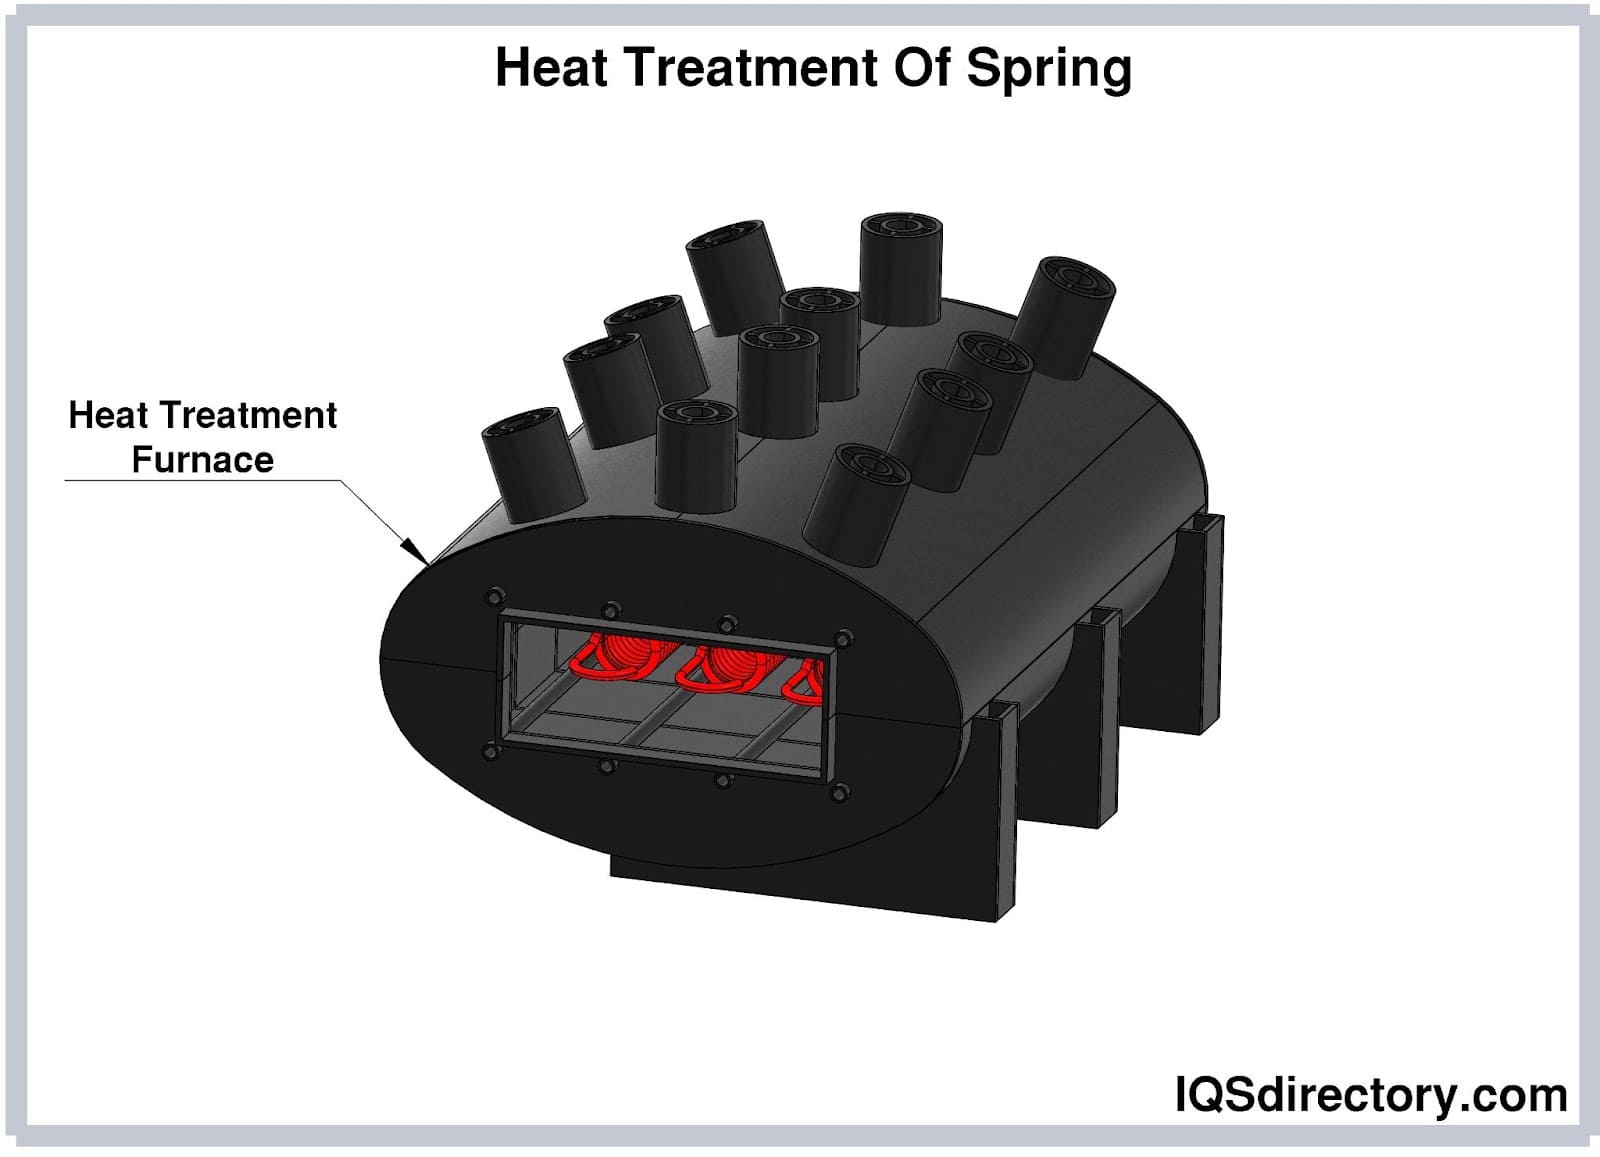 Heat Treatment Of Spring